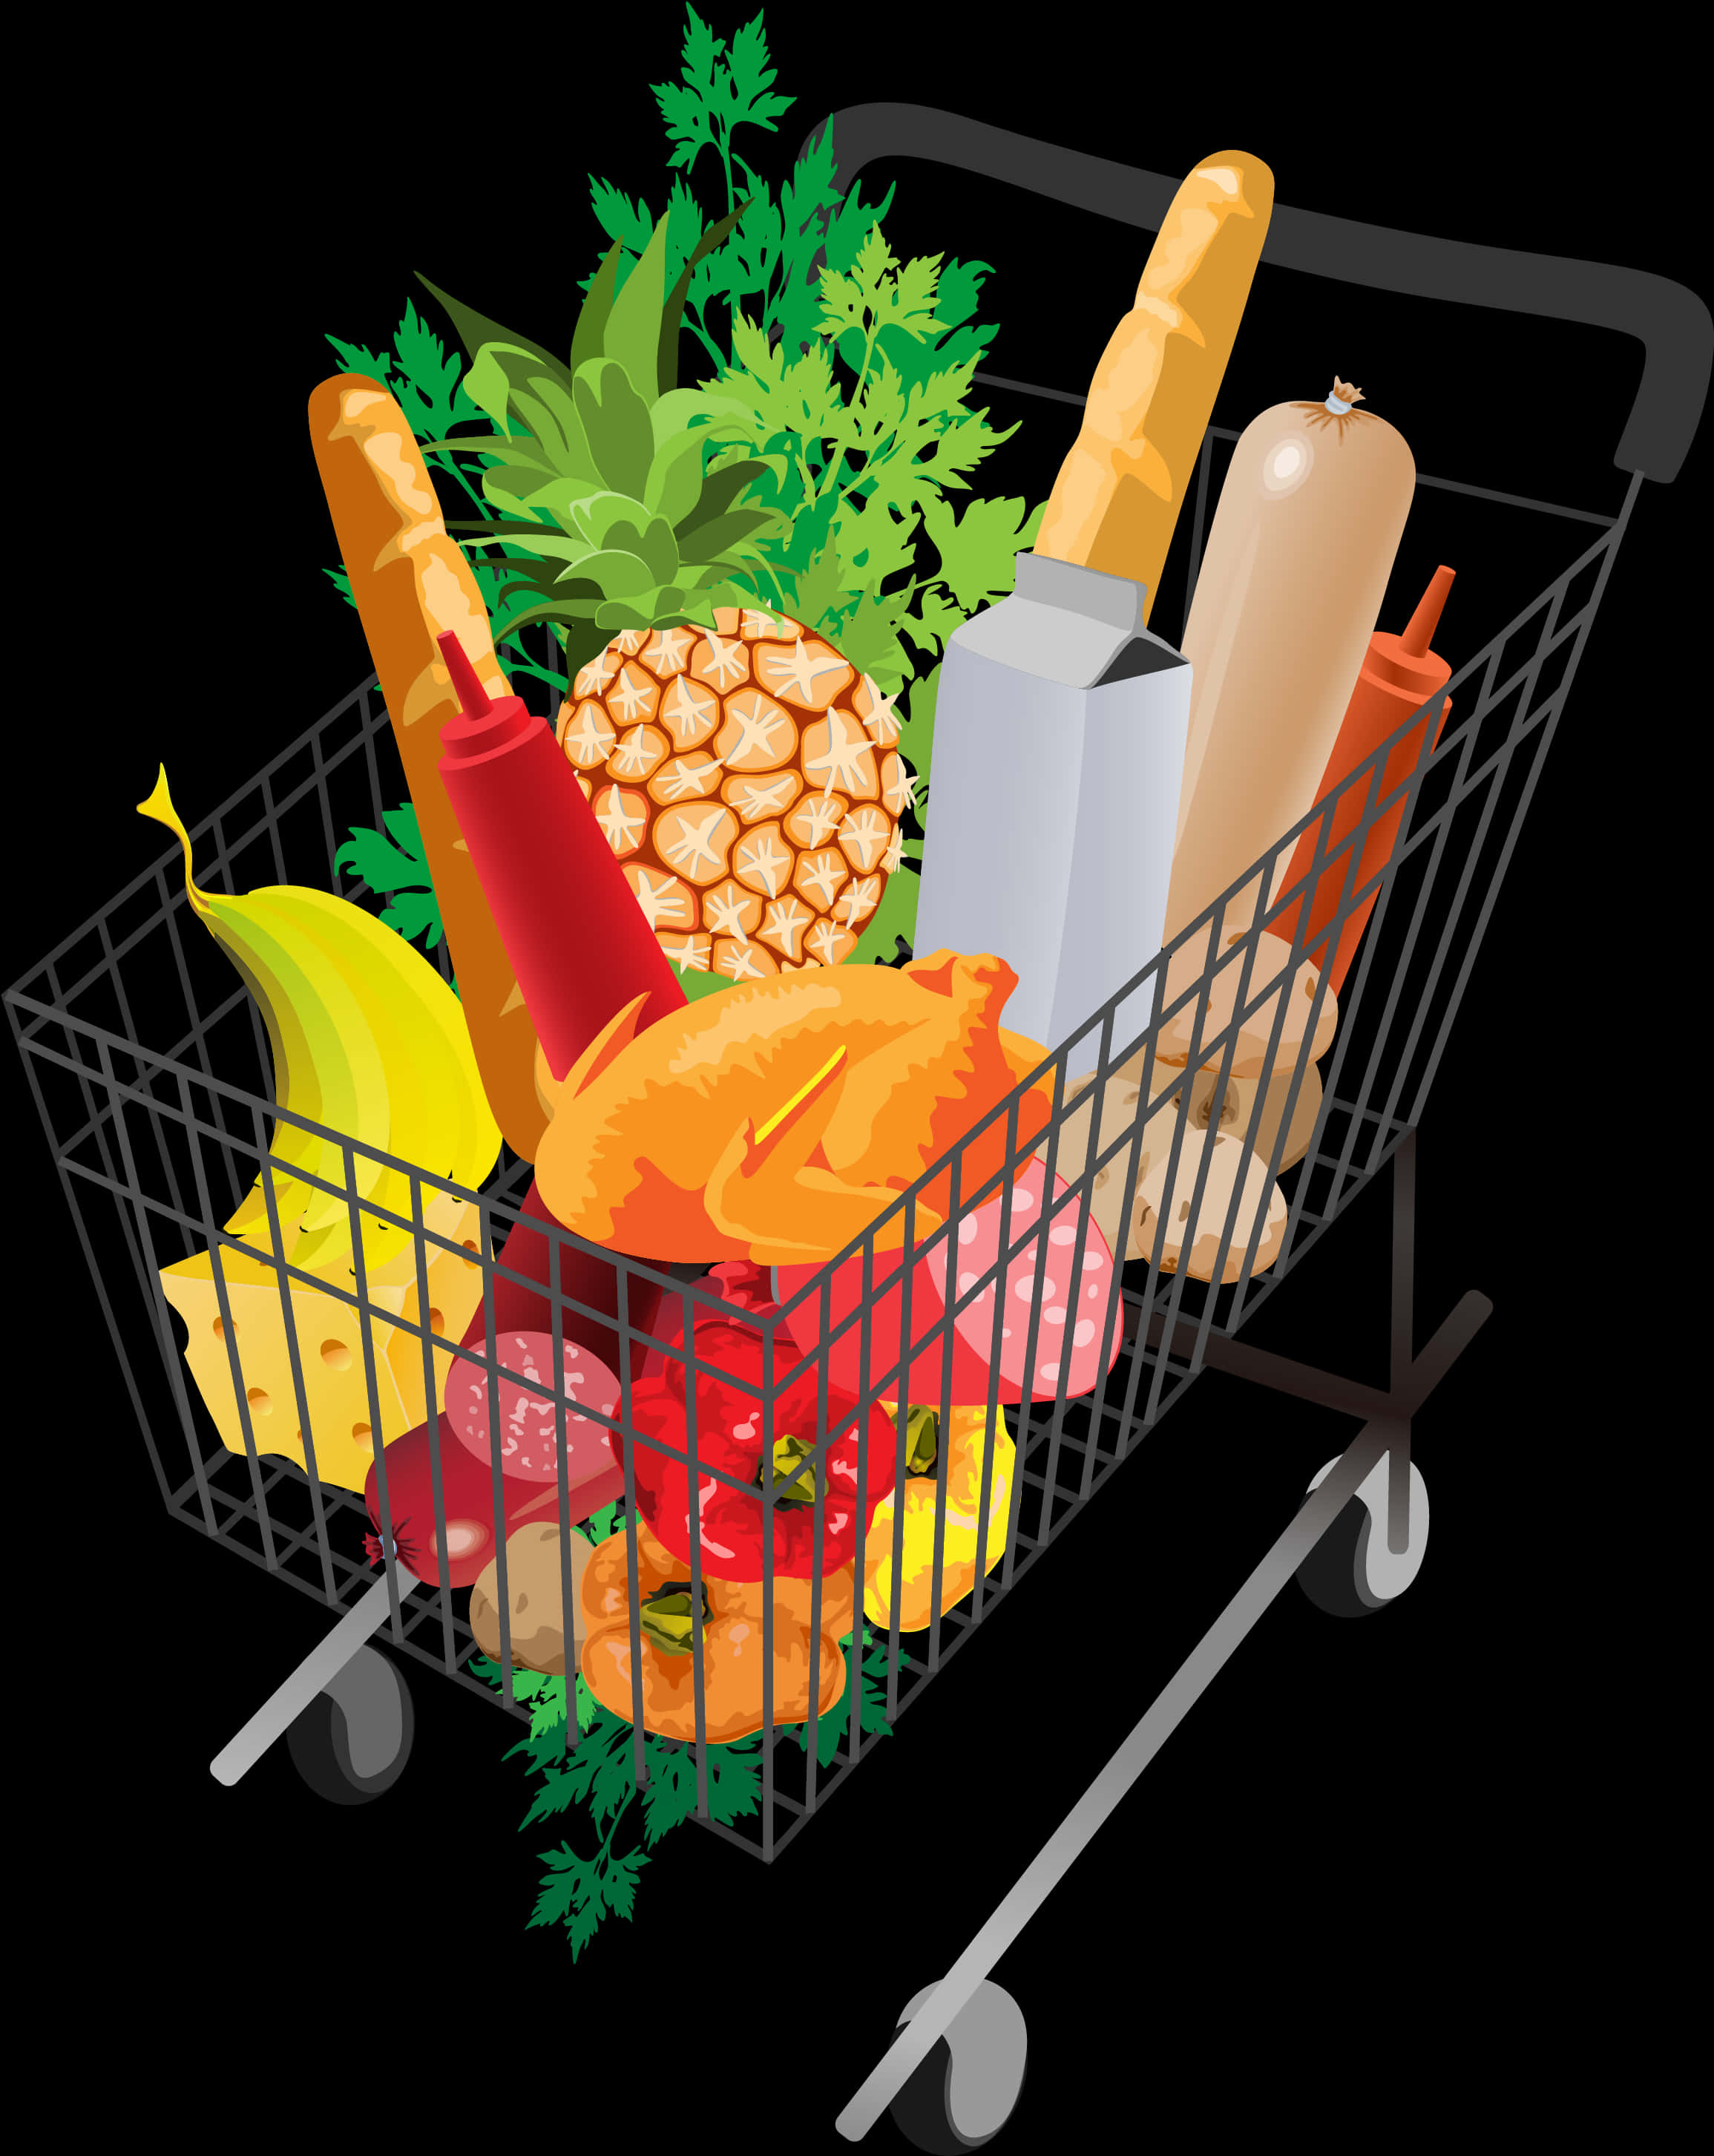 Grocery Shopping Cart Fullof Food Items.jpg